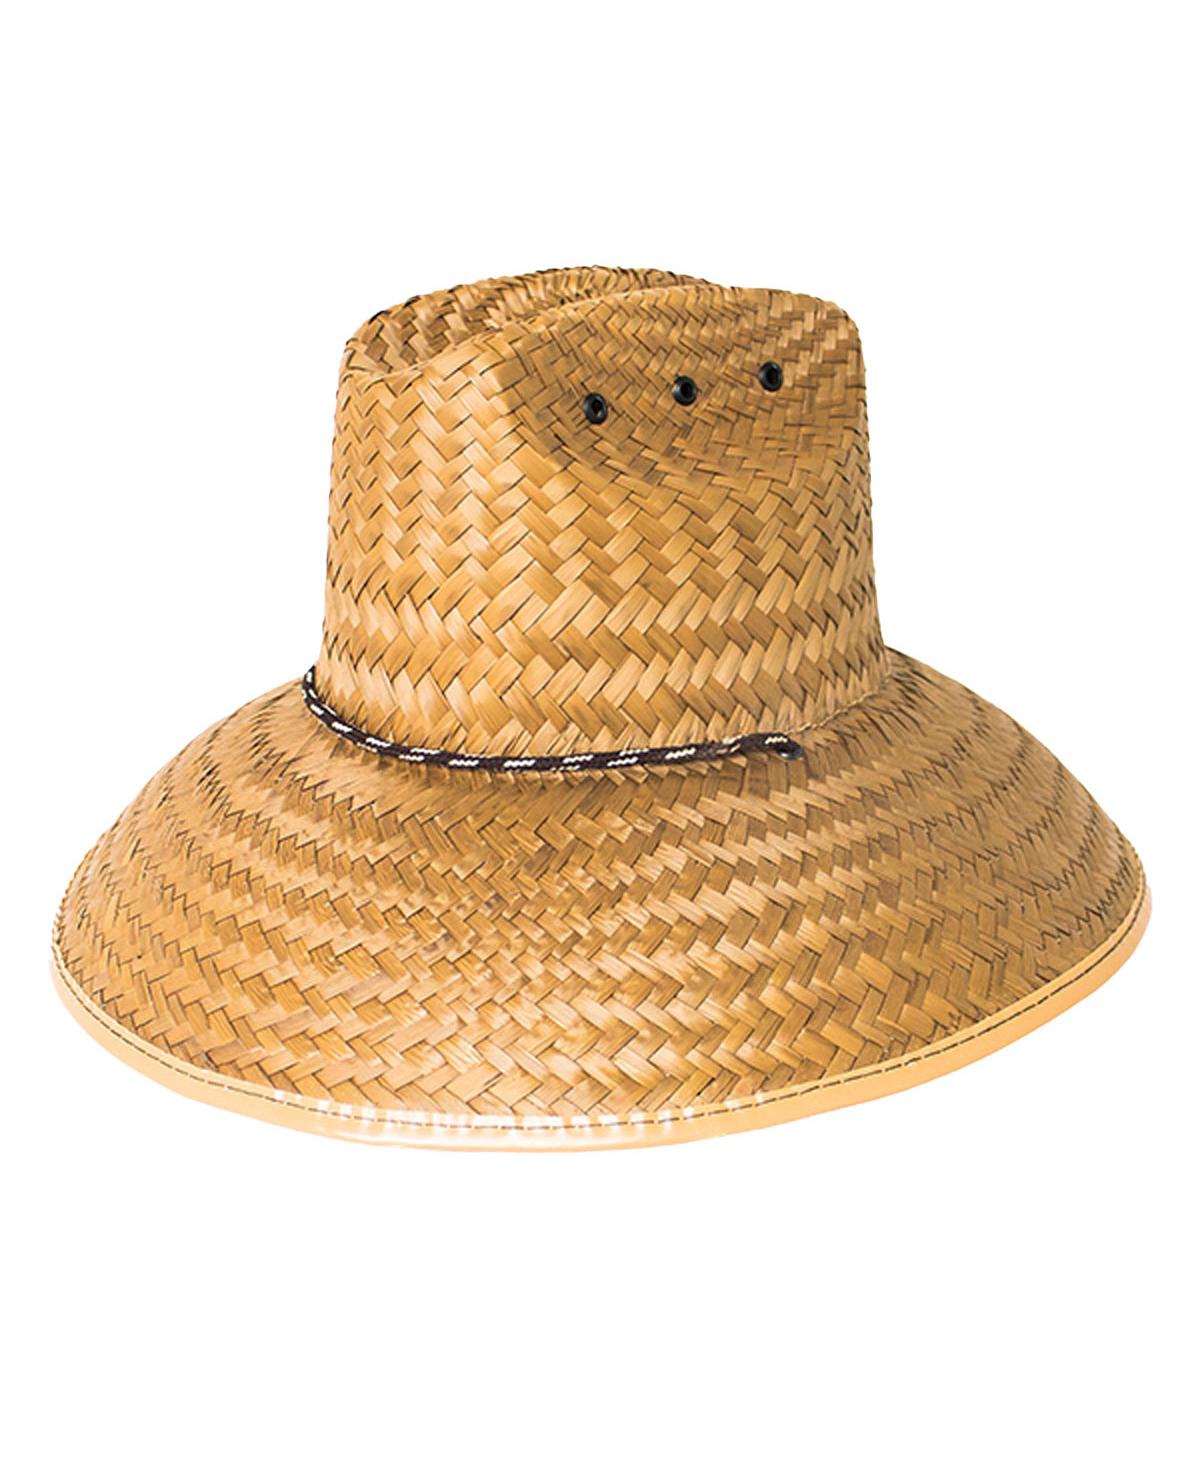 Hasselhoff Straw Lifeguard Hat - Natural